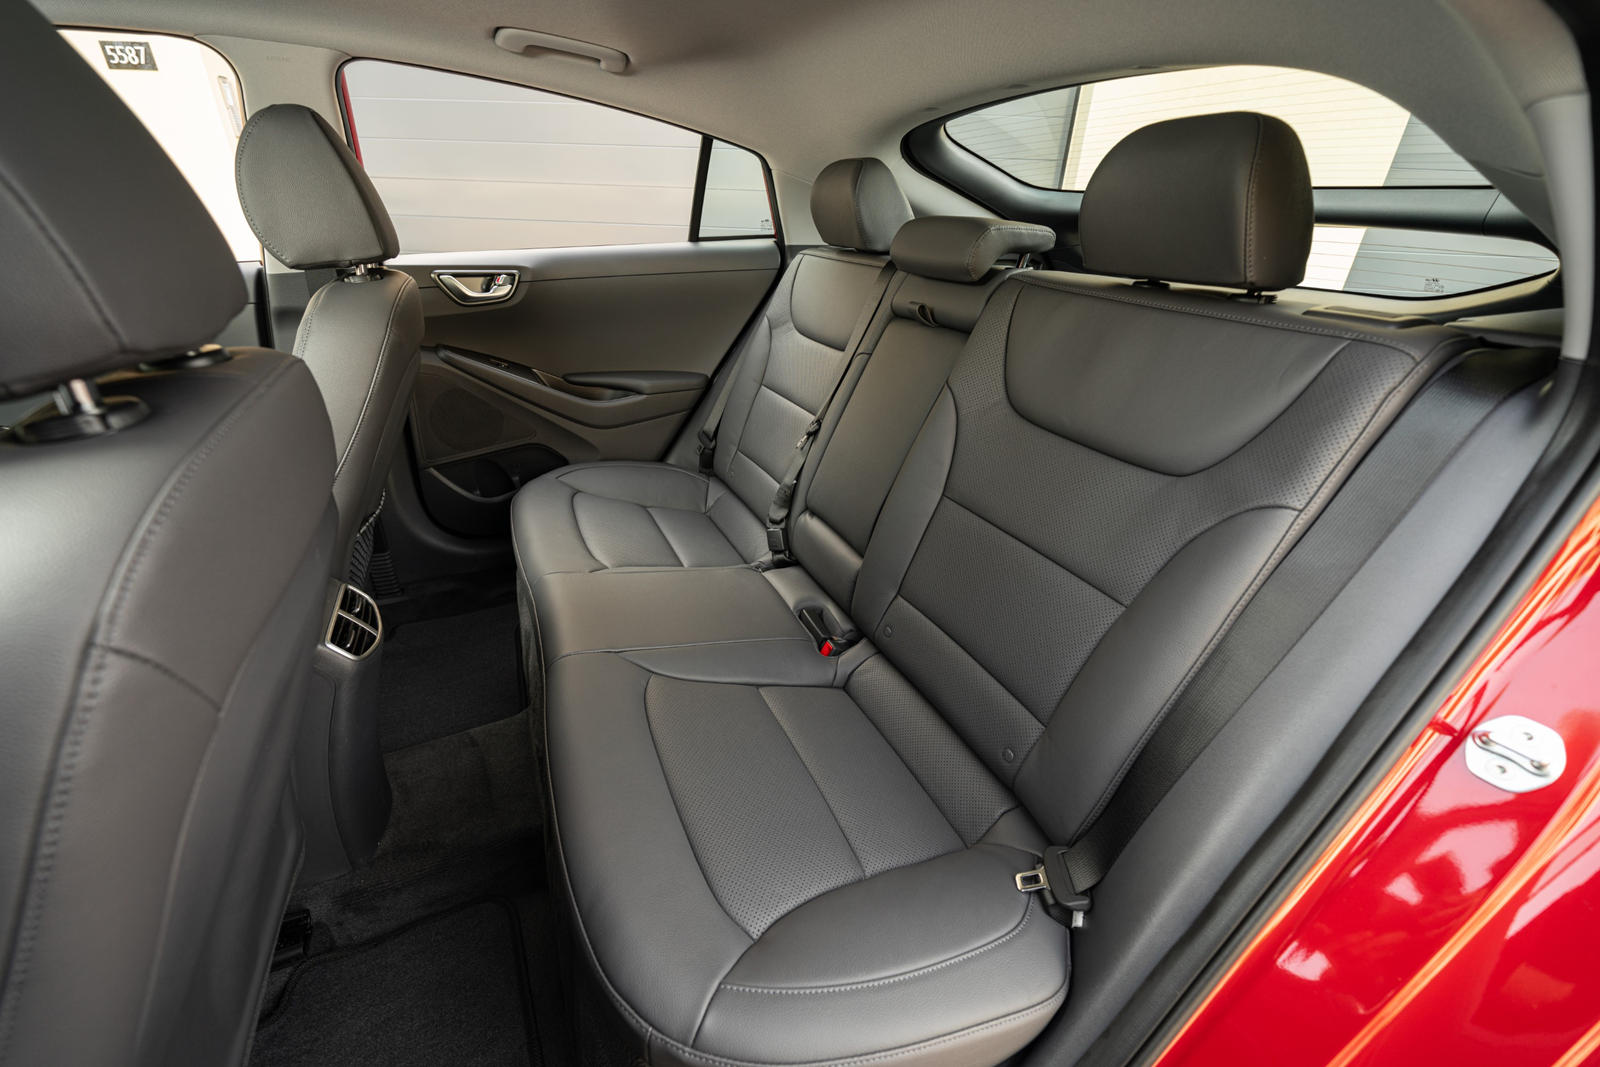 2022 Hyundai Ioniq Hybrid Interior Dimensions: Seating, Cargo Space & Trunk  Size - Photos | CarBuzz